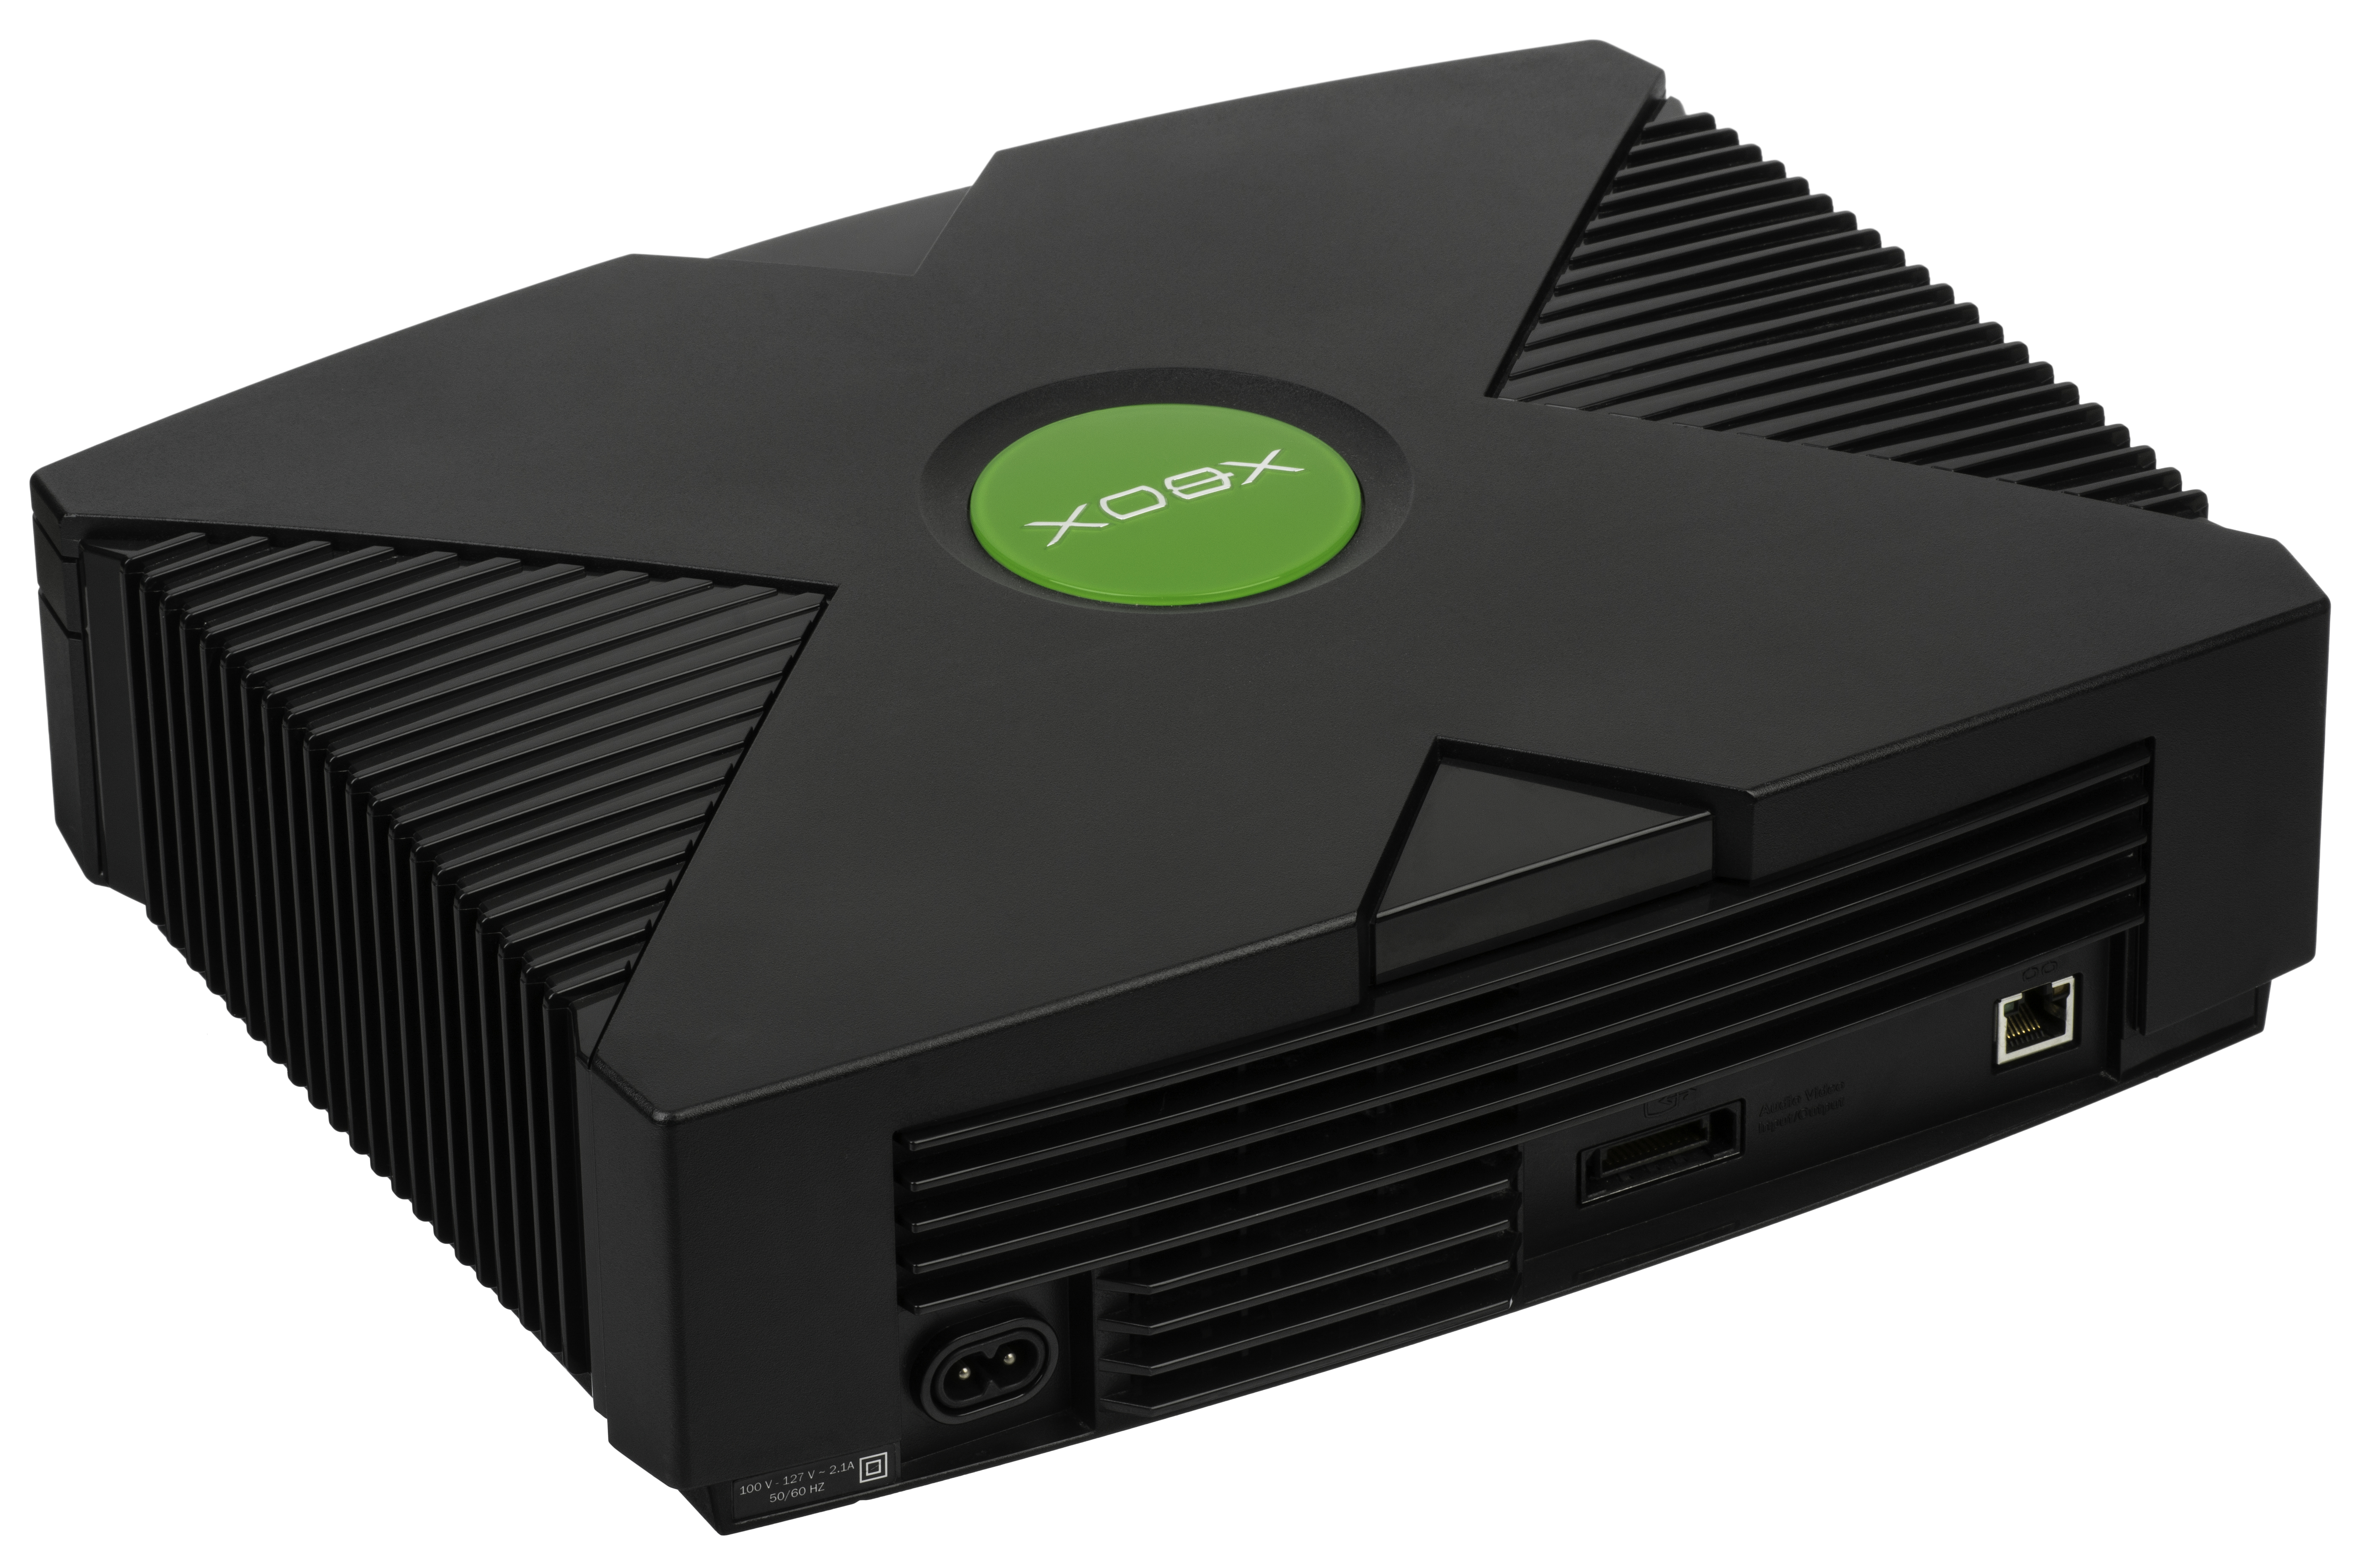 File:Xbox-360-E-Inputs-&-Outputs.jpg - Wikipedia